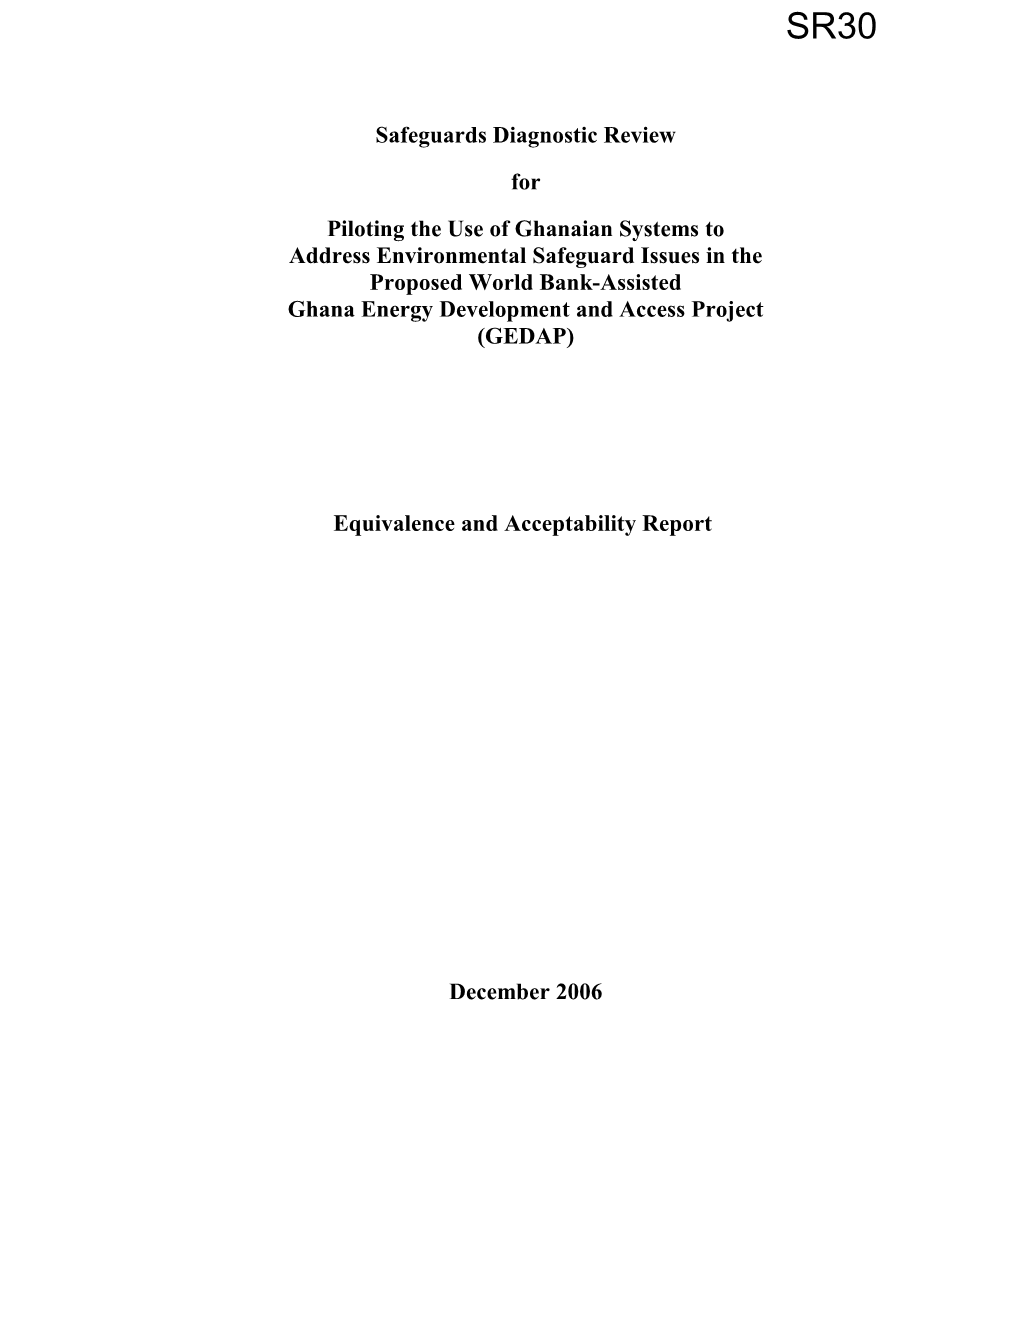 Assessment of Equivalence Summary Matrix Environmental Assessment